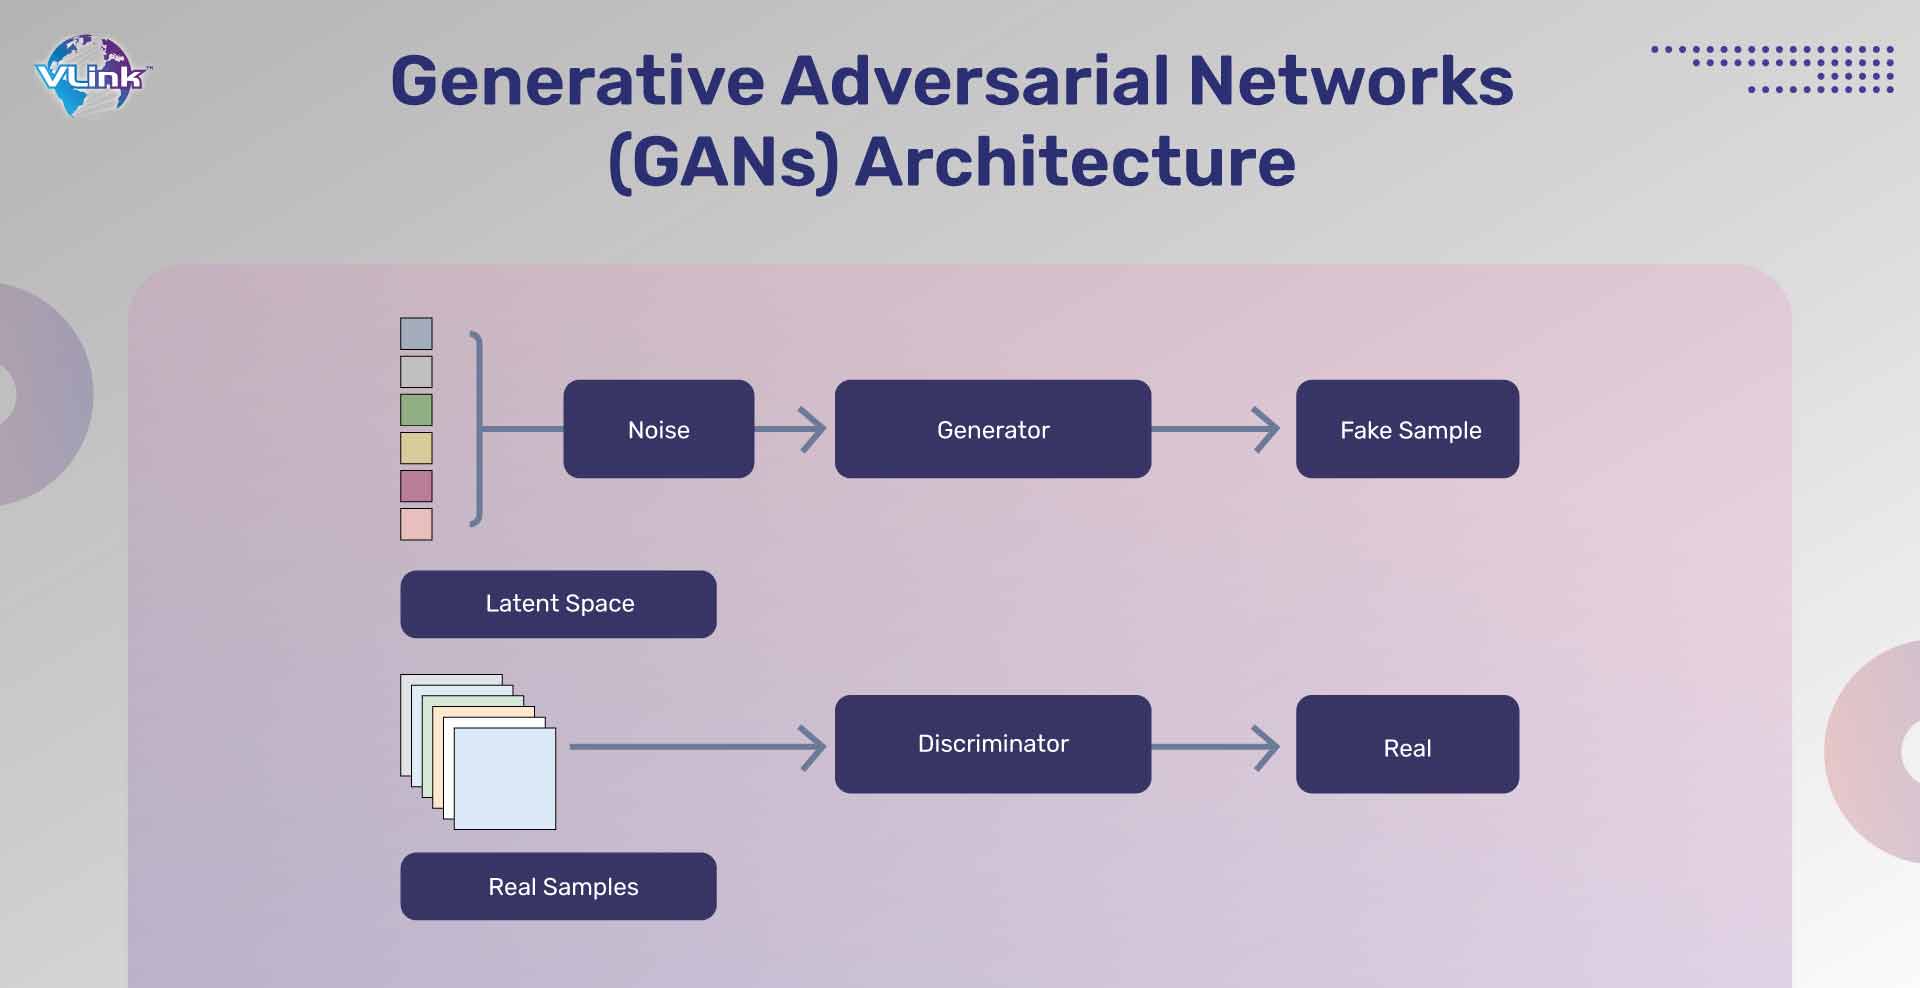 Generation Adversarial Networks Architechure